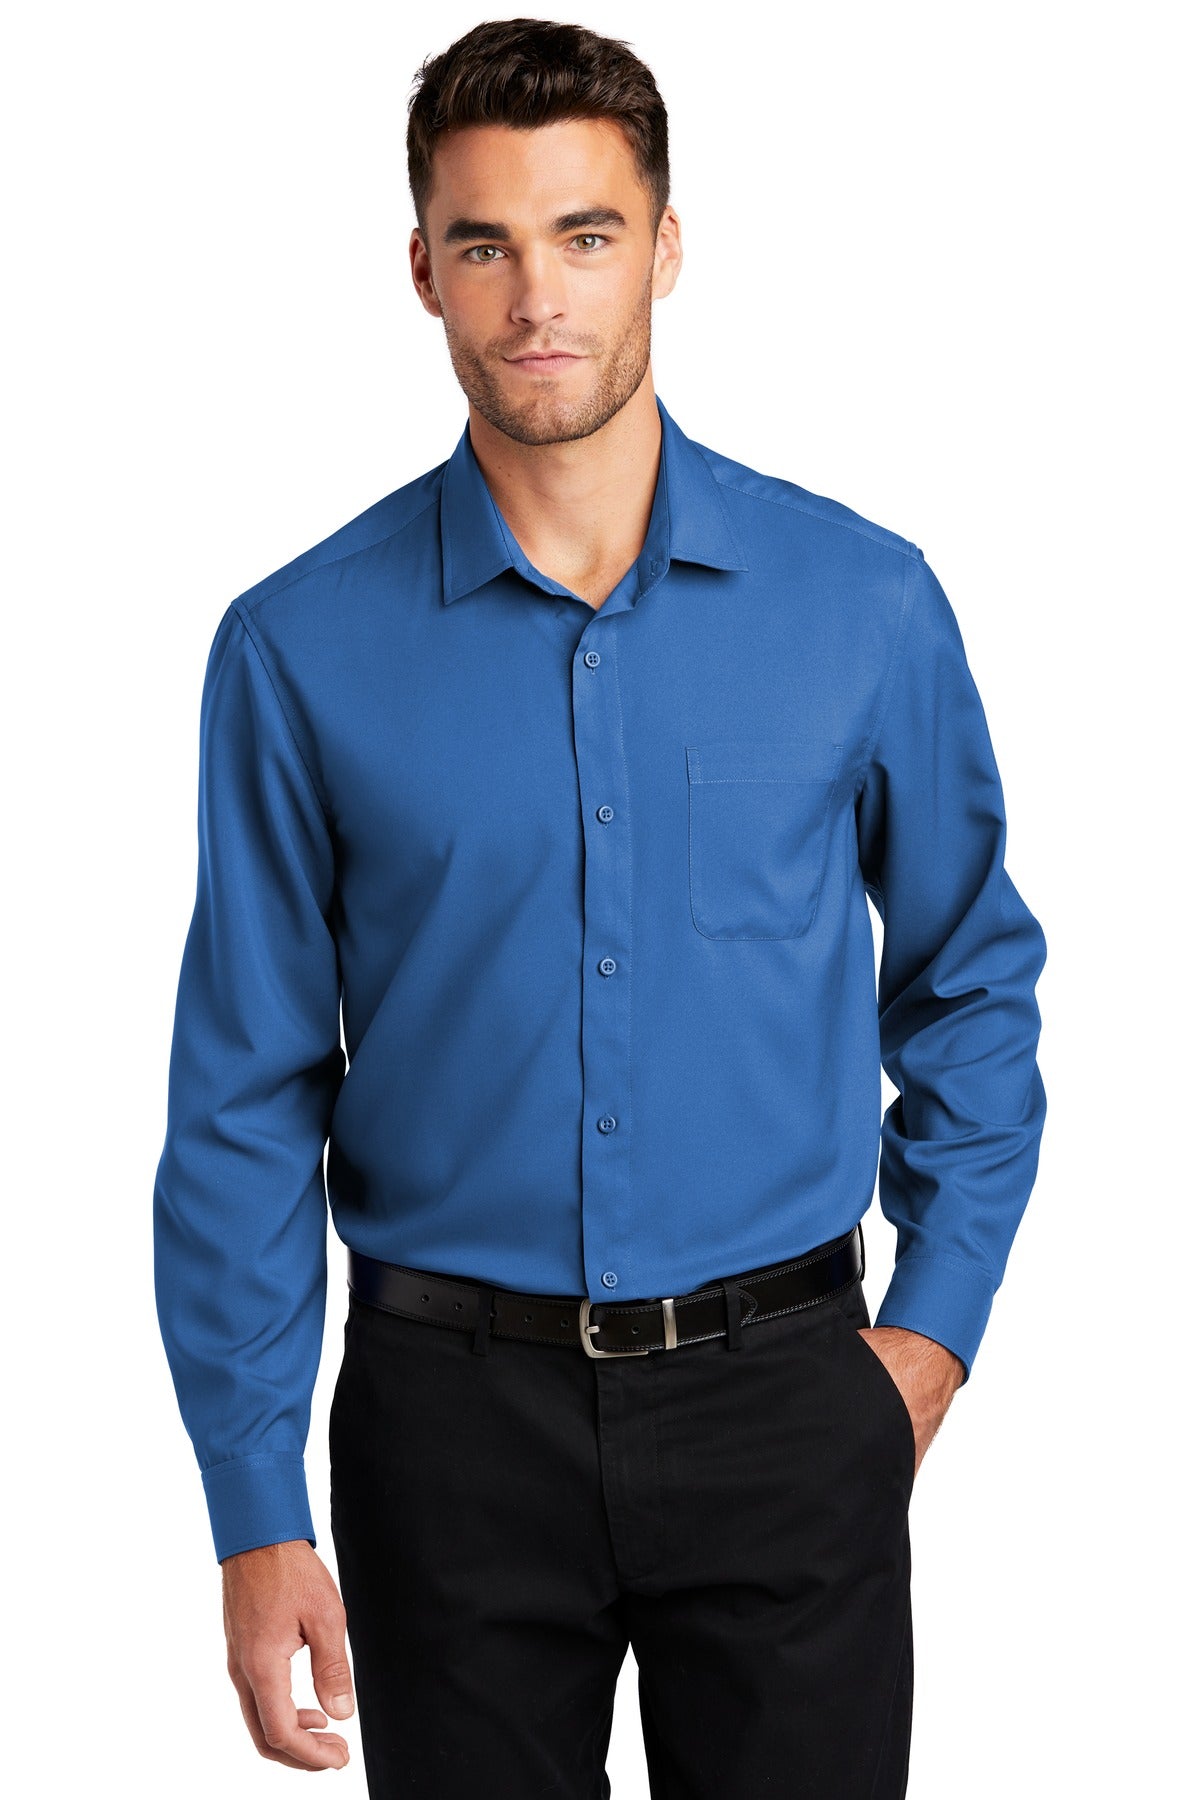 Woven Shirts True Blue Port Authority